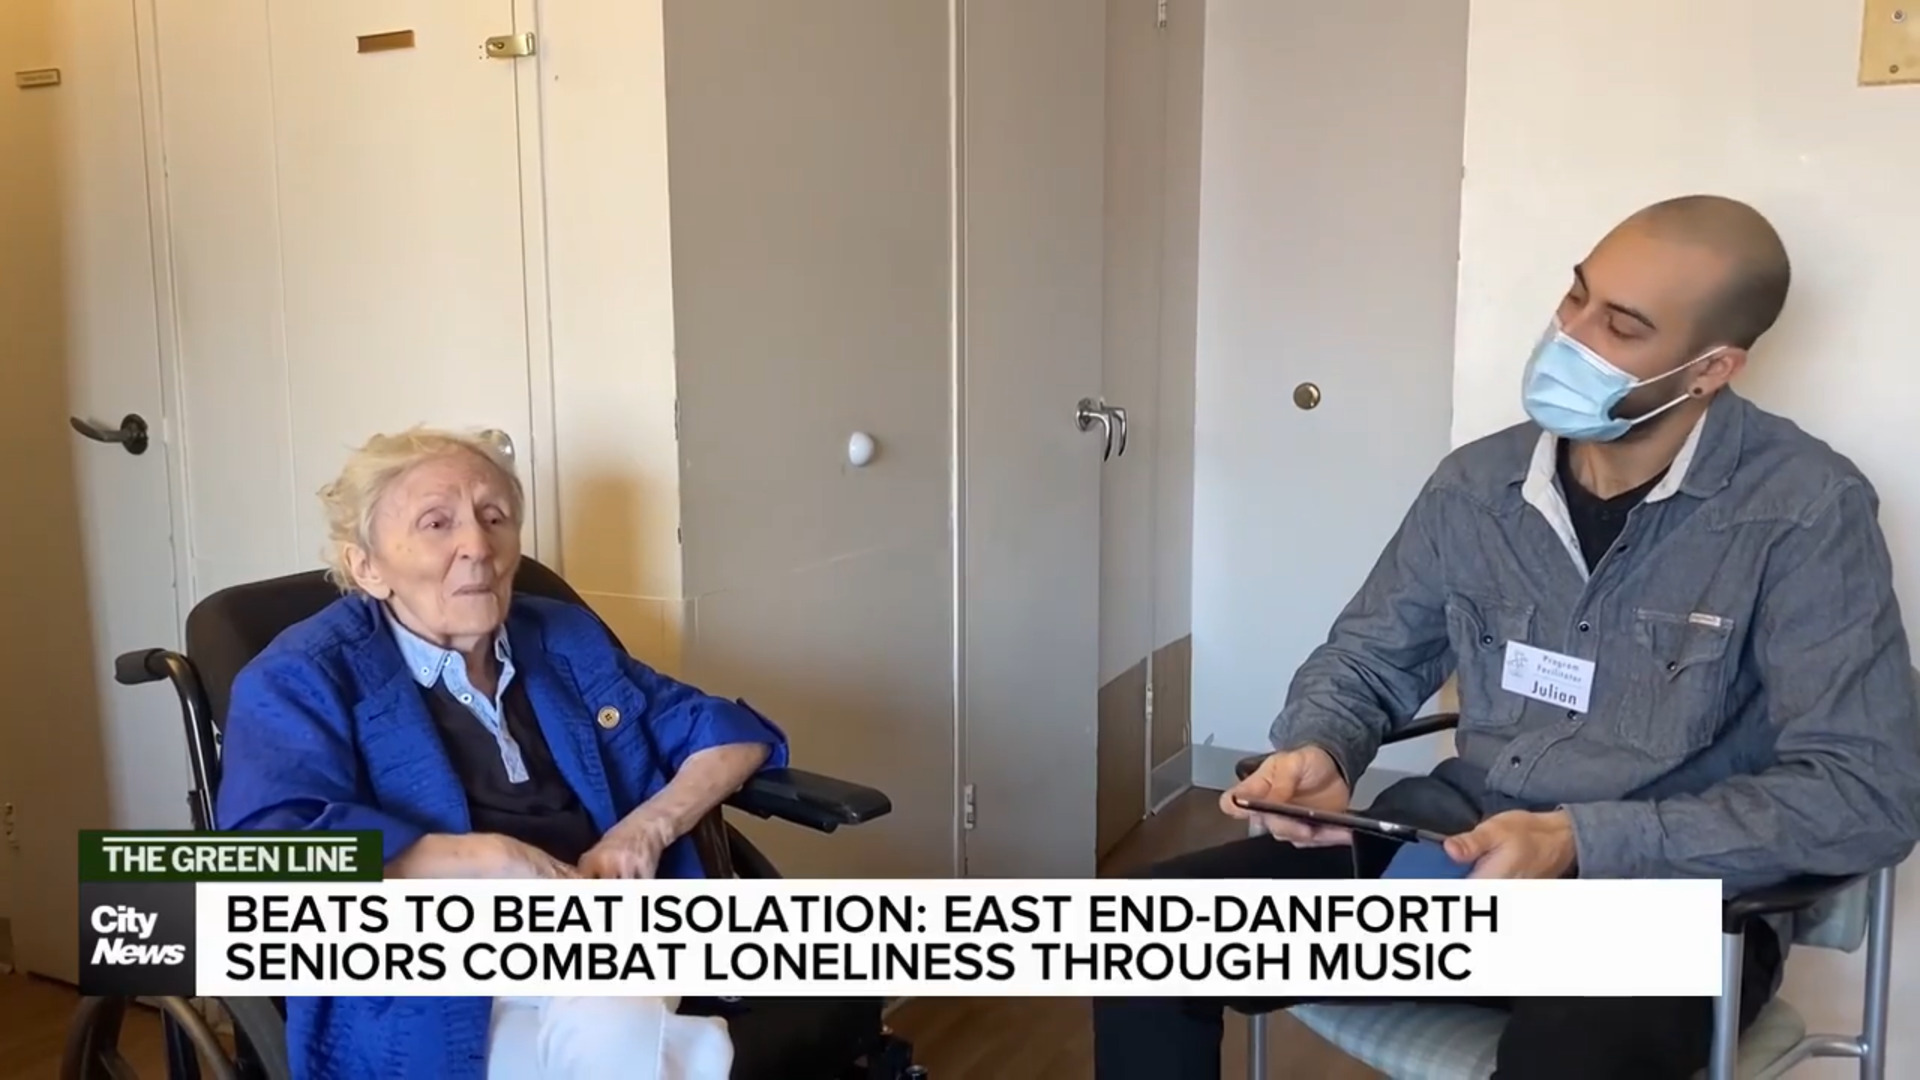 Danforth seniors combating loneliness through music